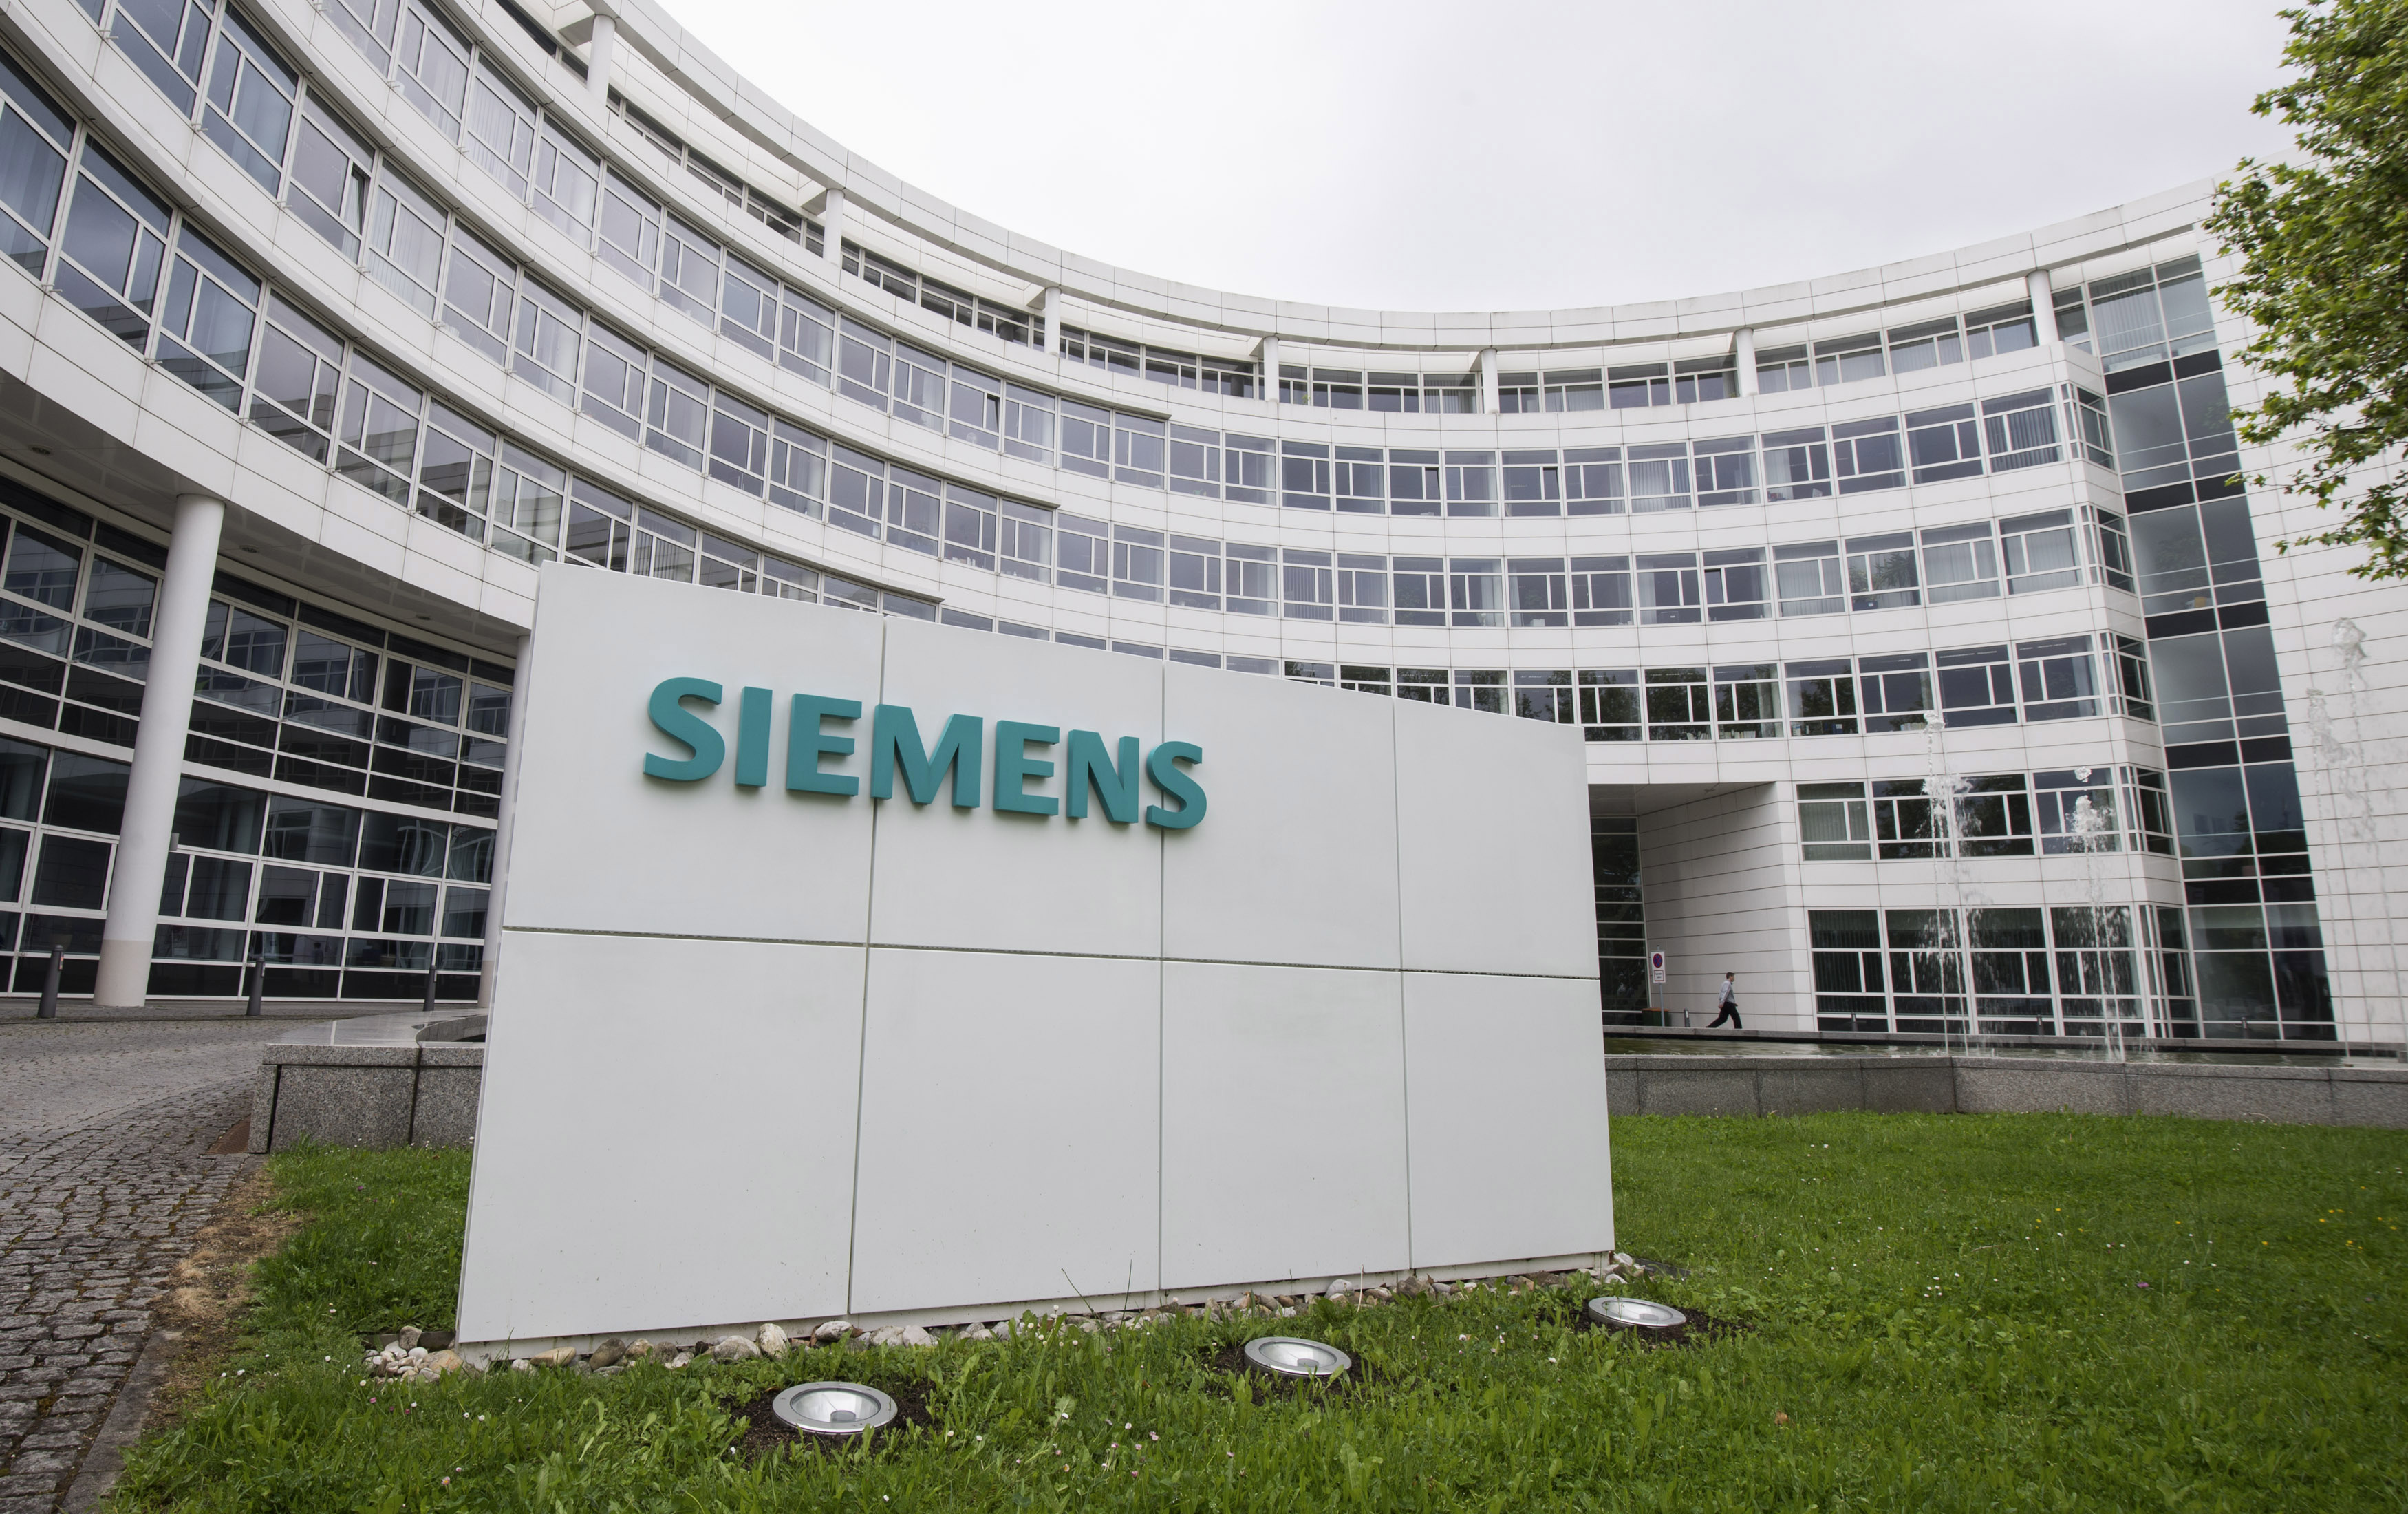 Company germany. Немецкий концерн Siemens. Завод Сименс в Германии. Siemens головной офис Германия. Фирма Сименс в Мюнхене.